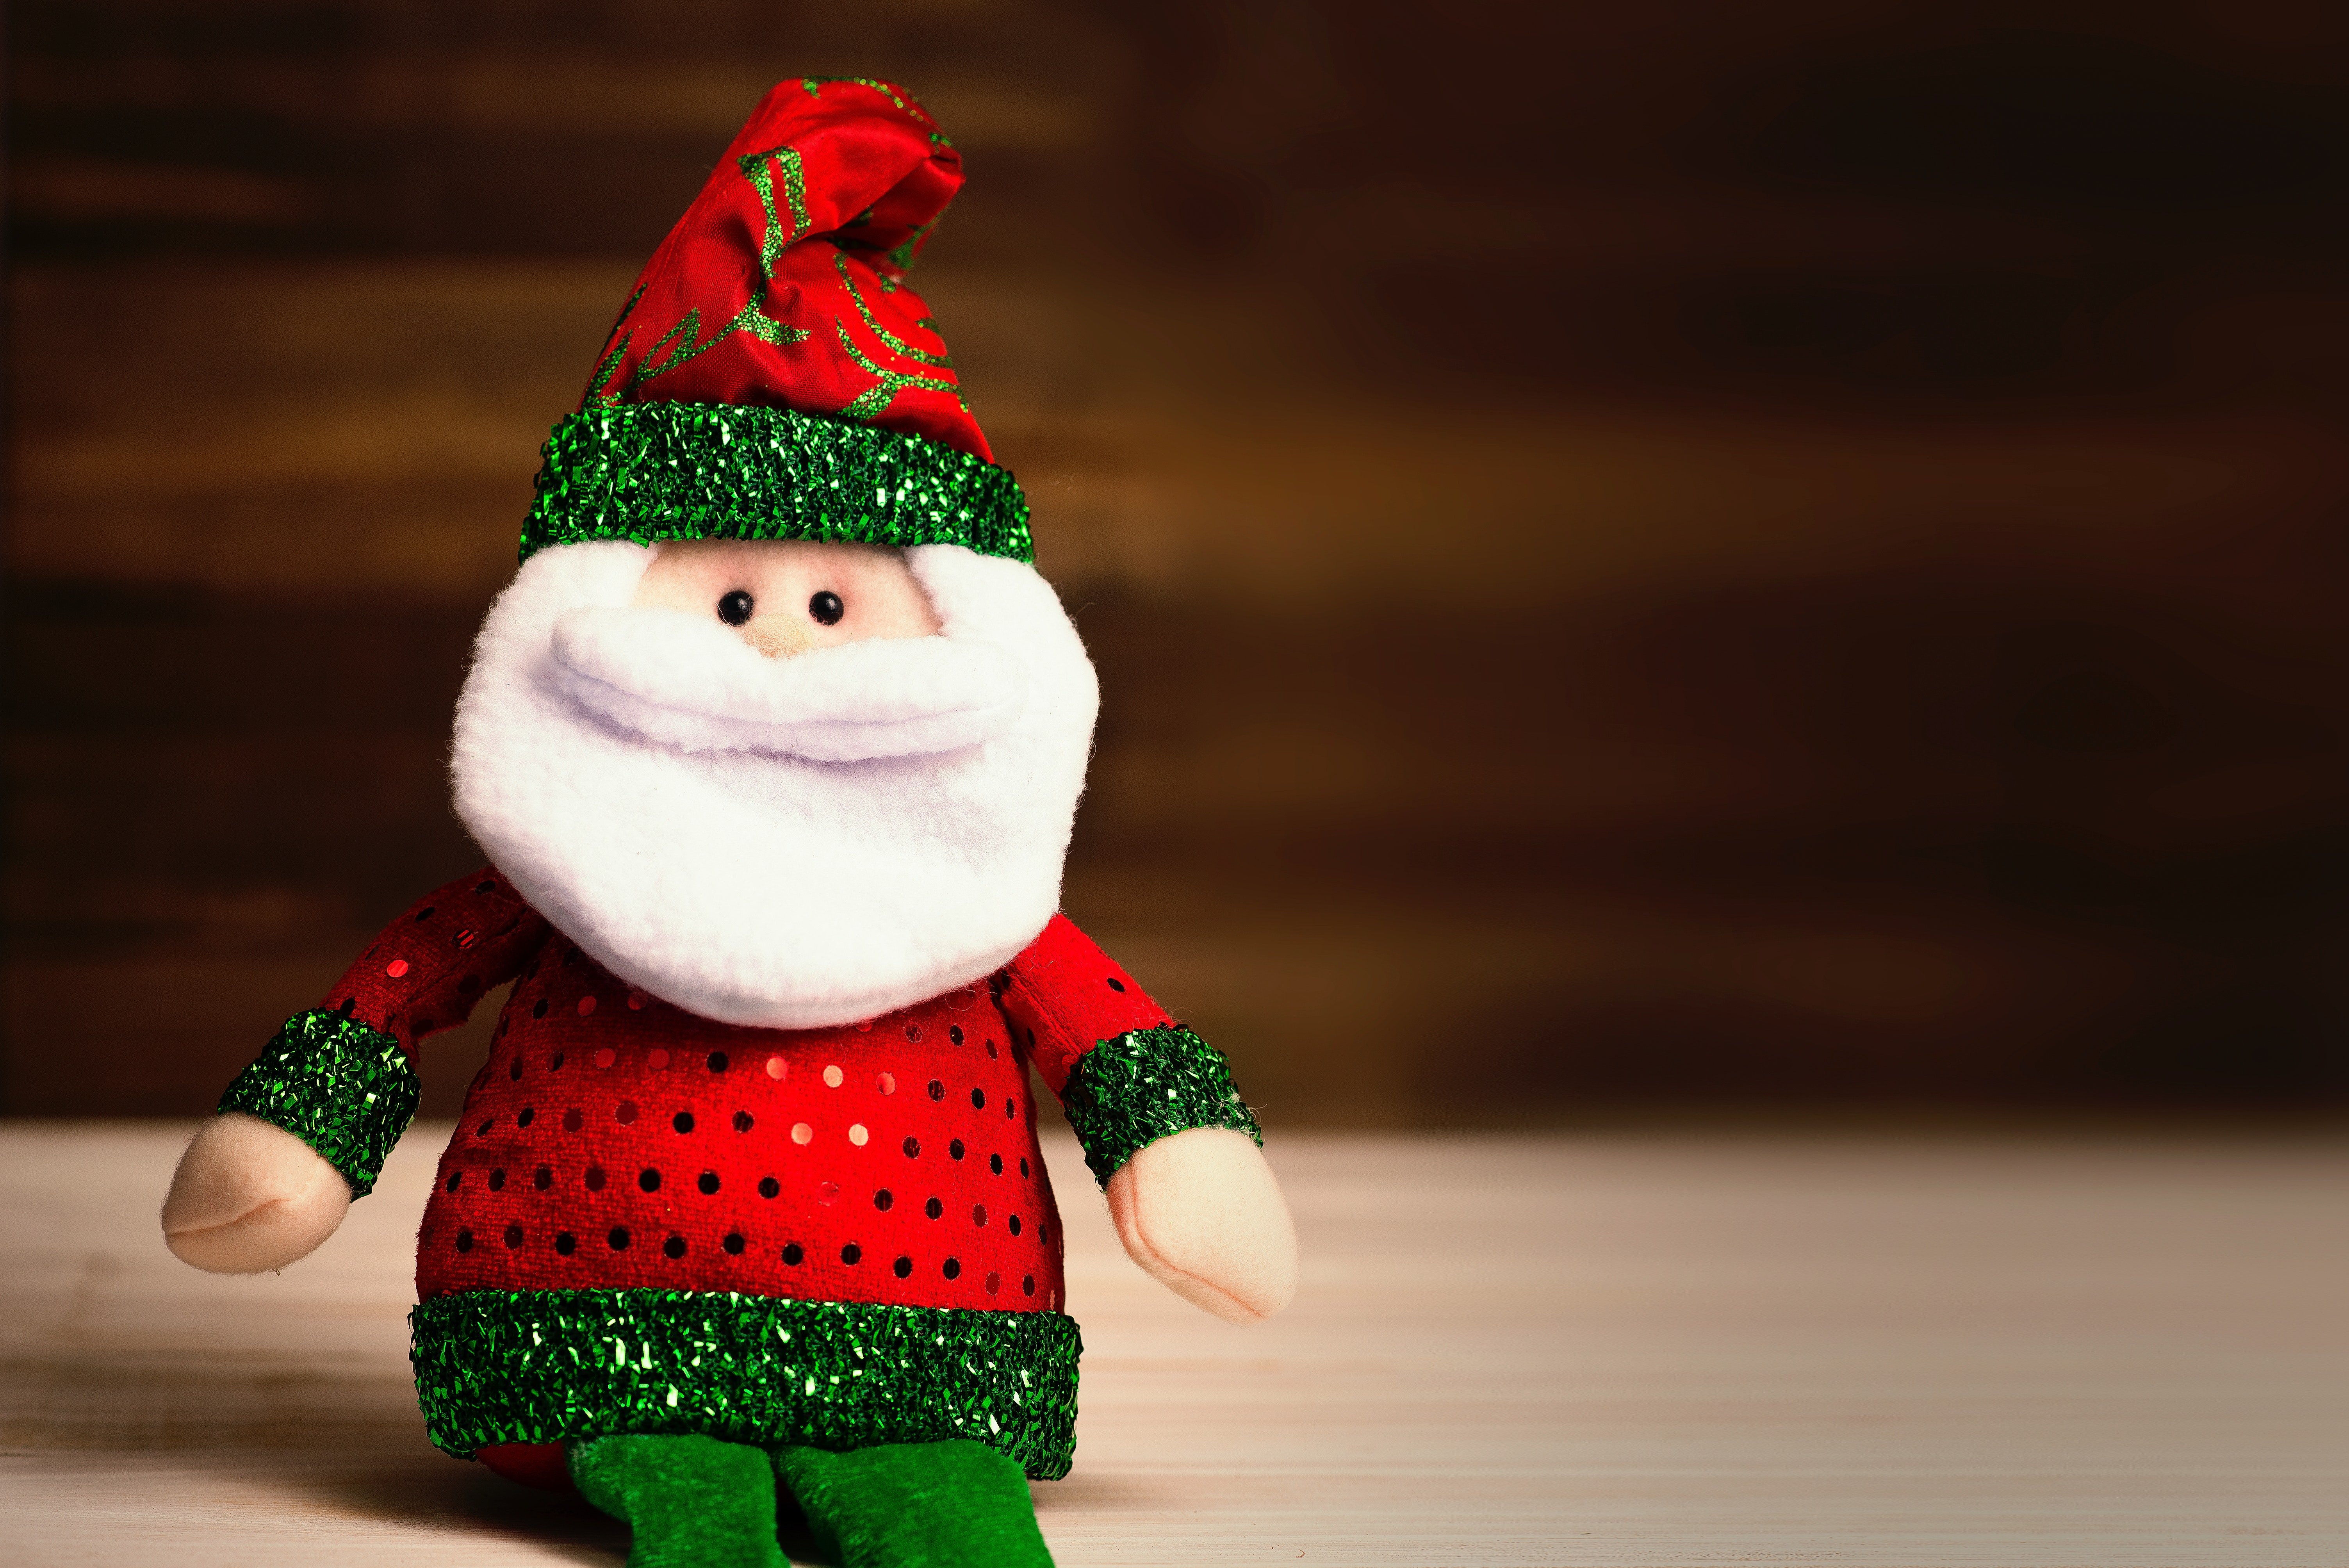 Santa Claus' plush toy. | Photo: Pexels